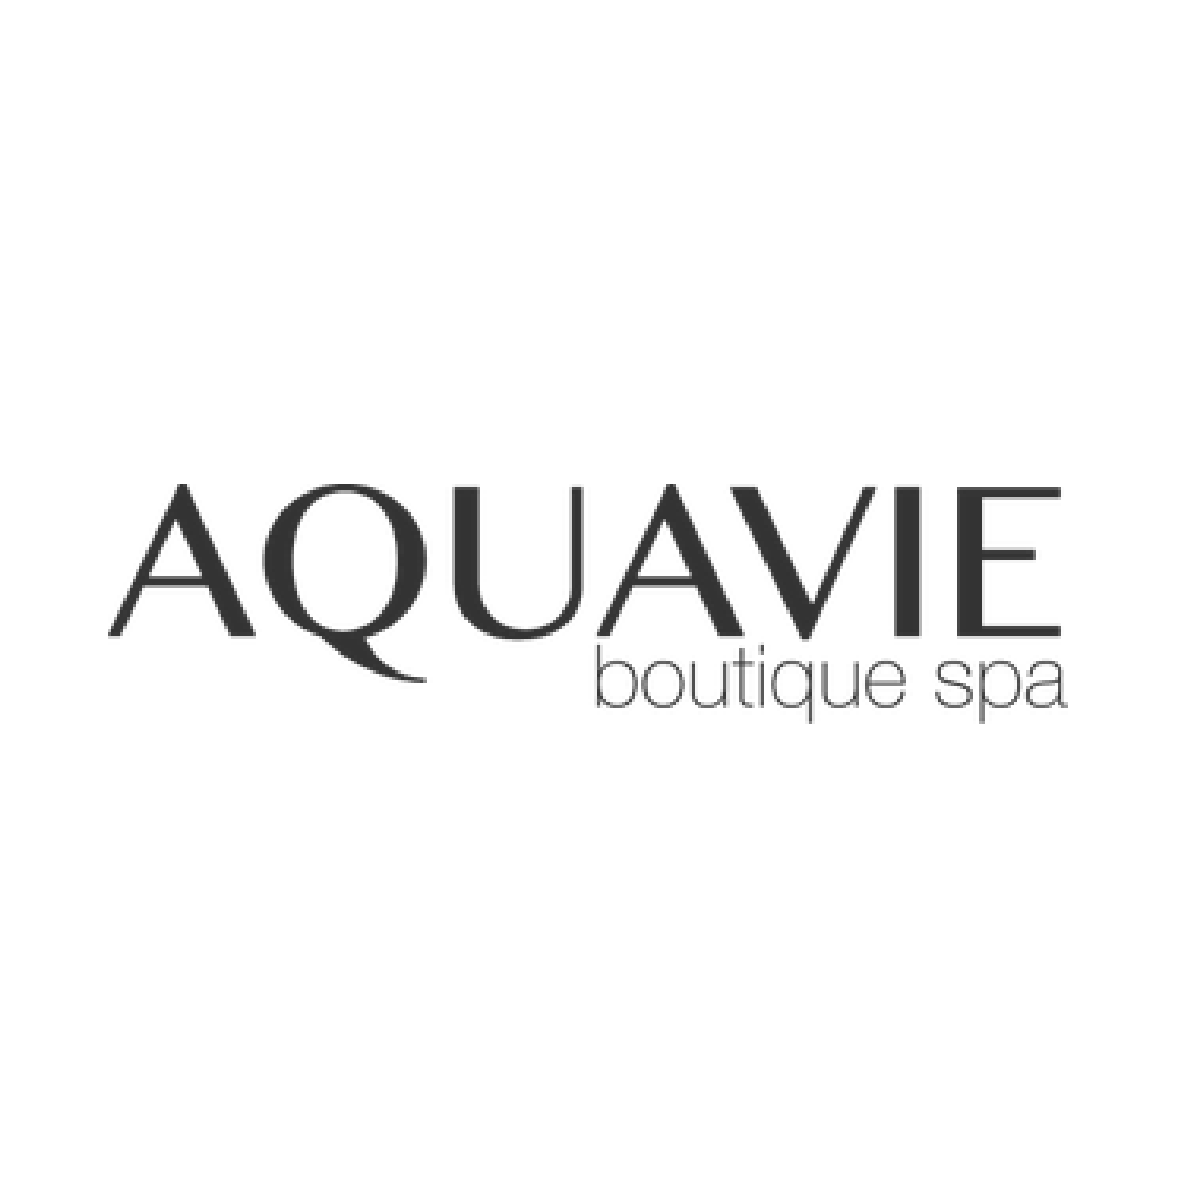 AQUAVIE logo